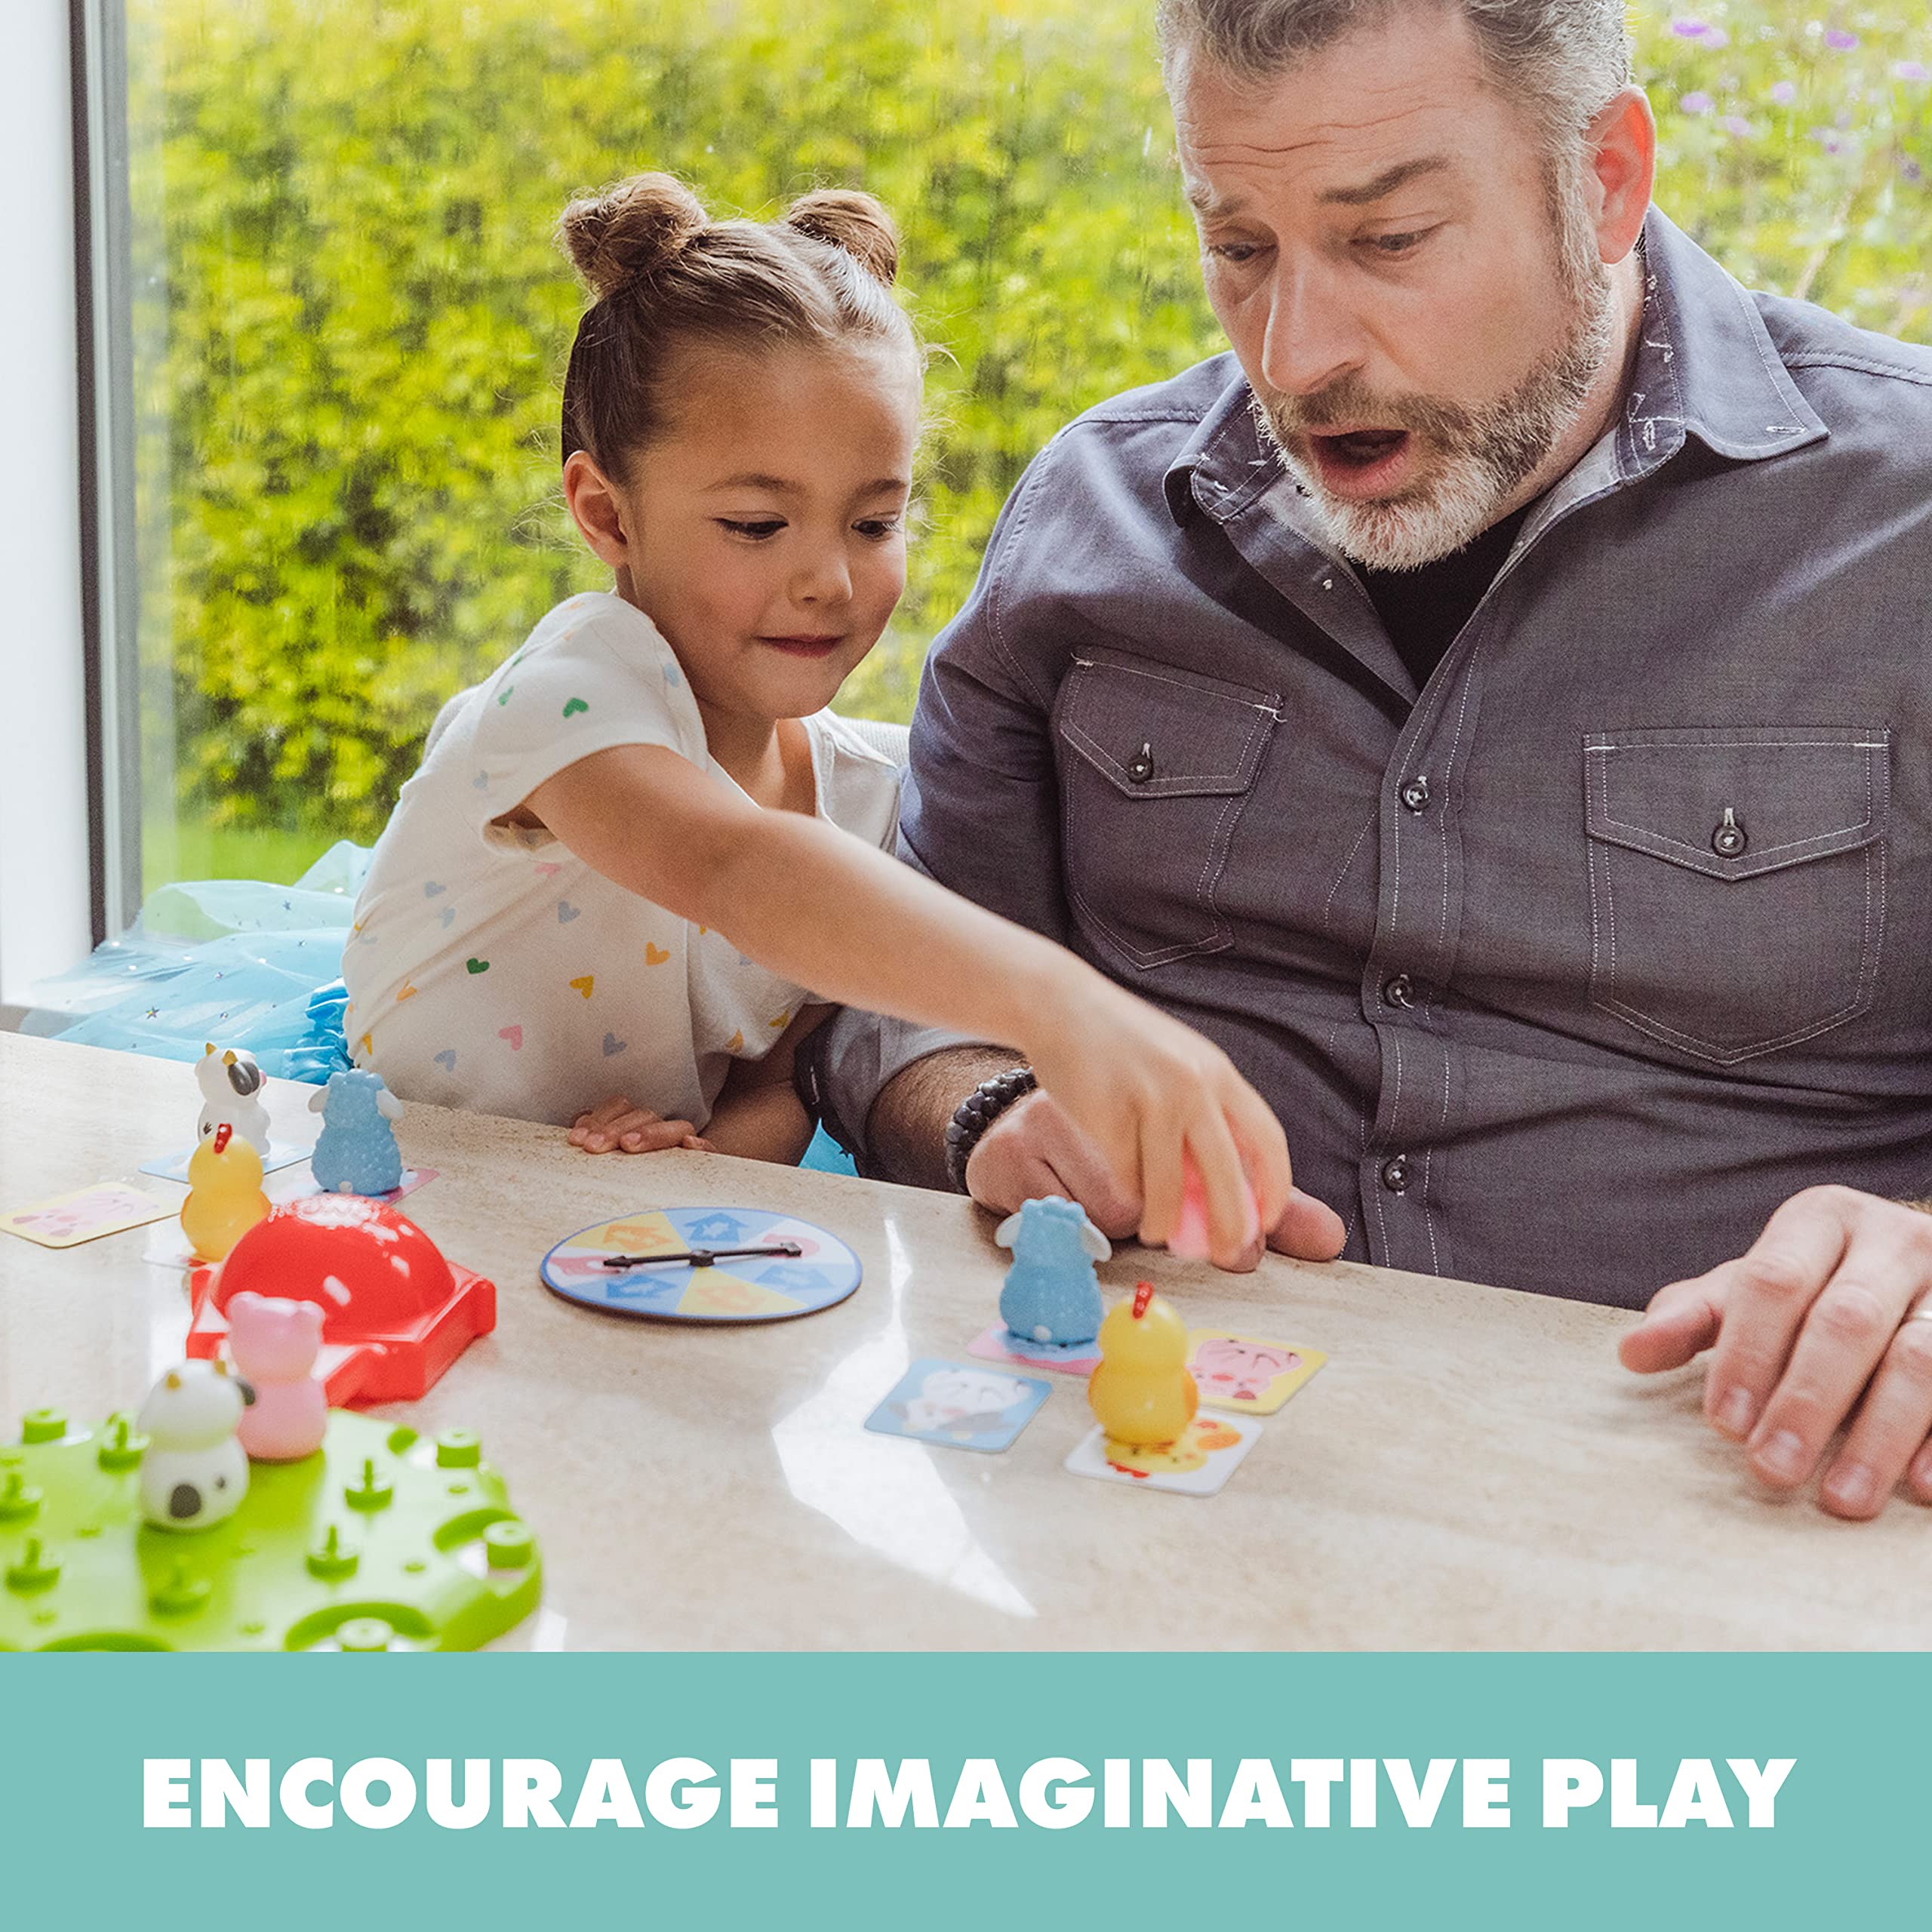 Educational Insights Barnyard Bounce Game, Preschool Memory & Matching Game, Boys & Girls Ages 3+